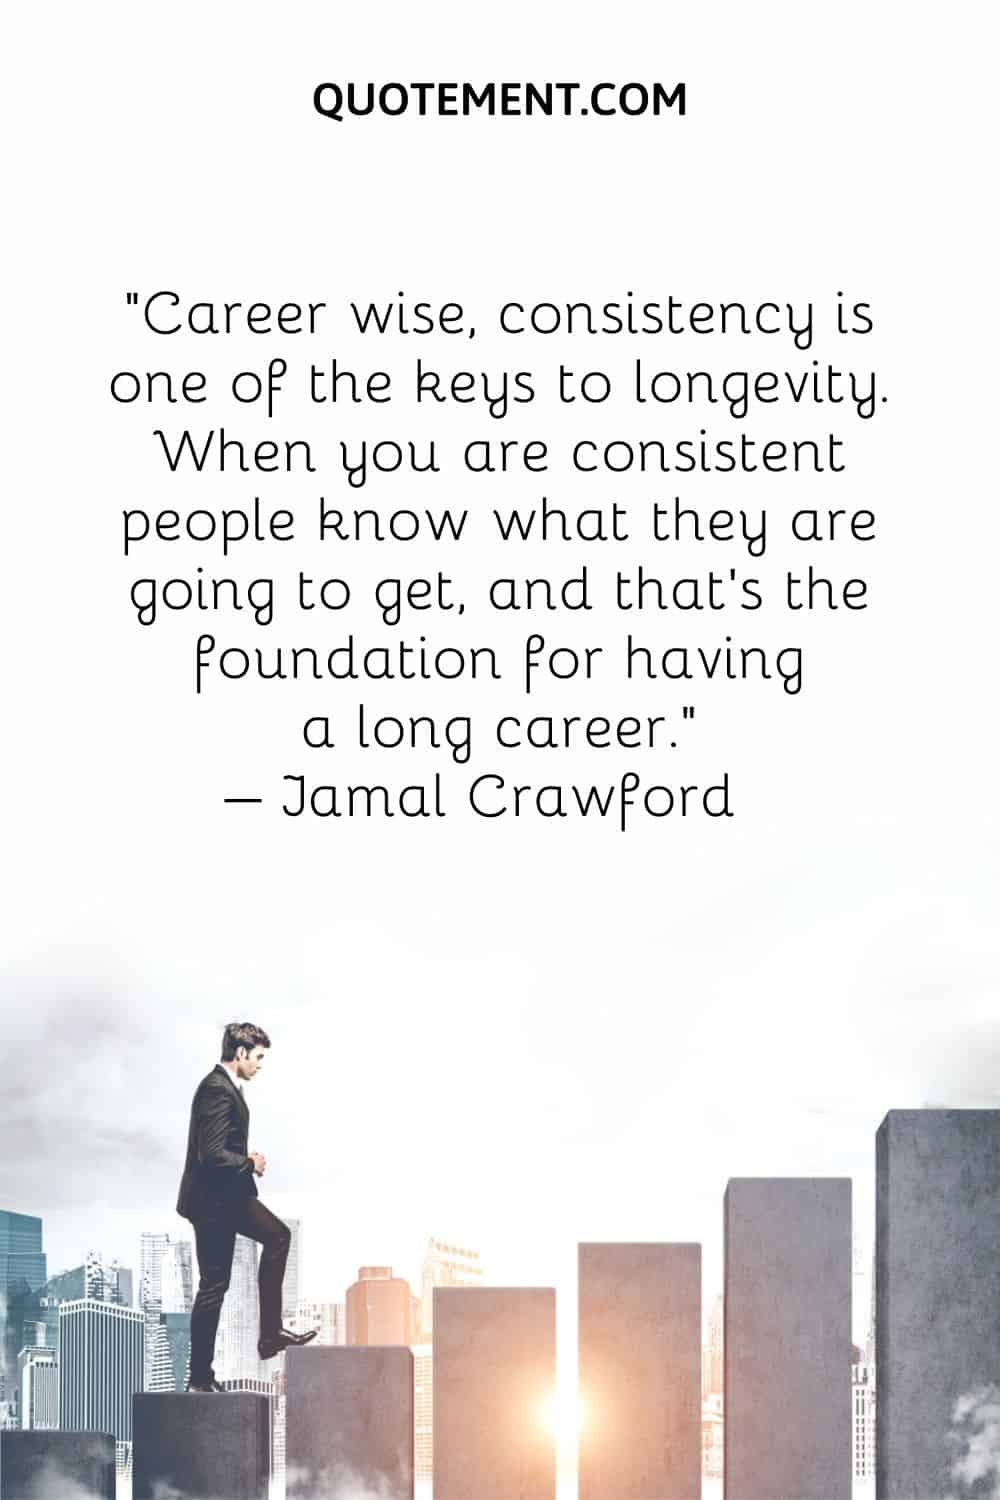 Career wise, consistency is one of the keys to longevity